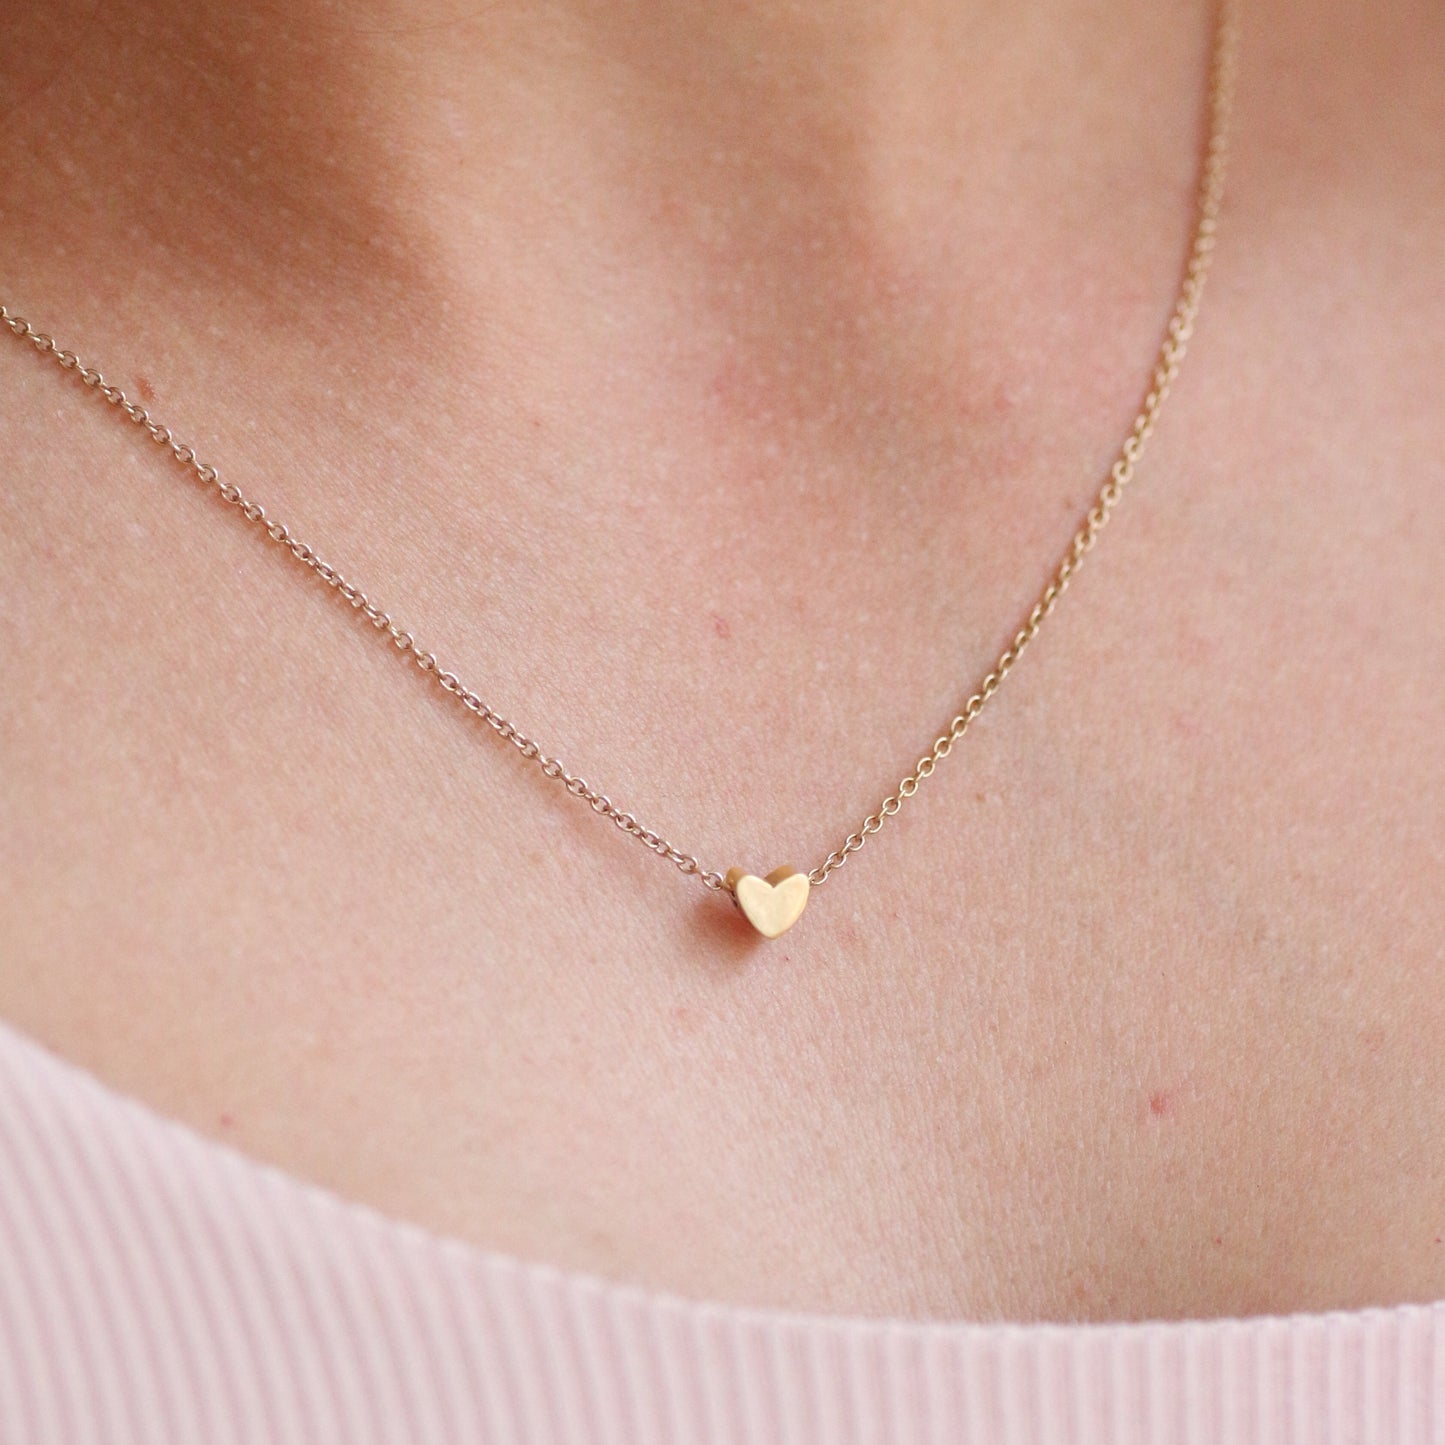 Golden heart necklace 14k